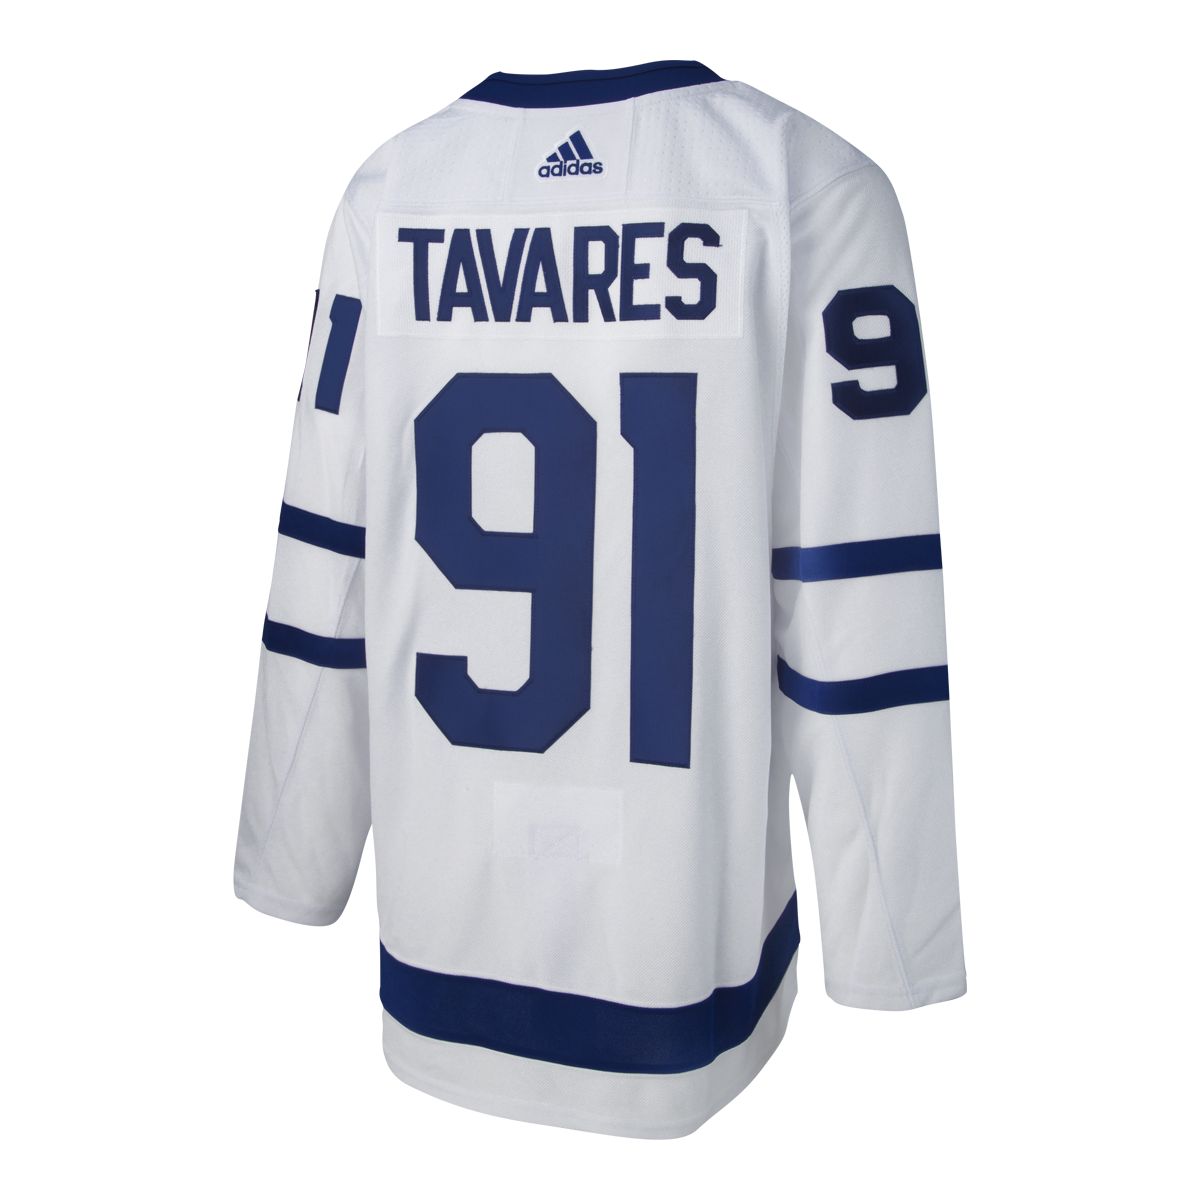 John Tavares Light Blue Stitched NHL Jersey